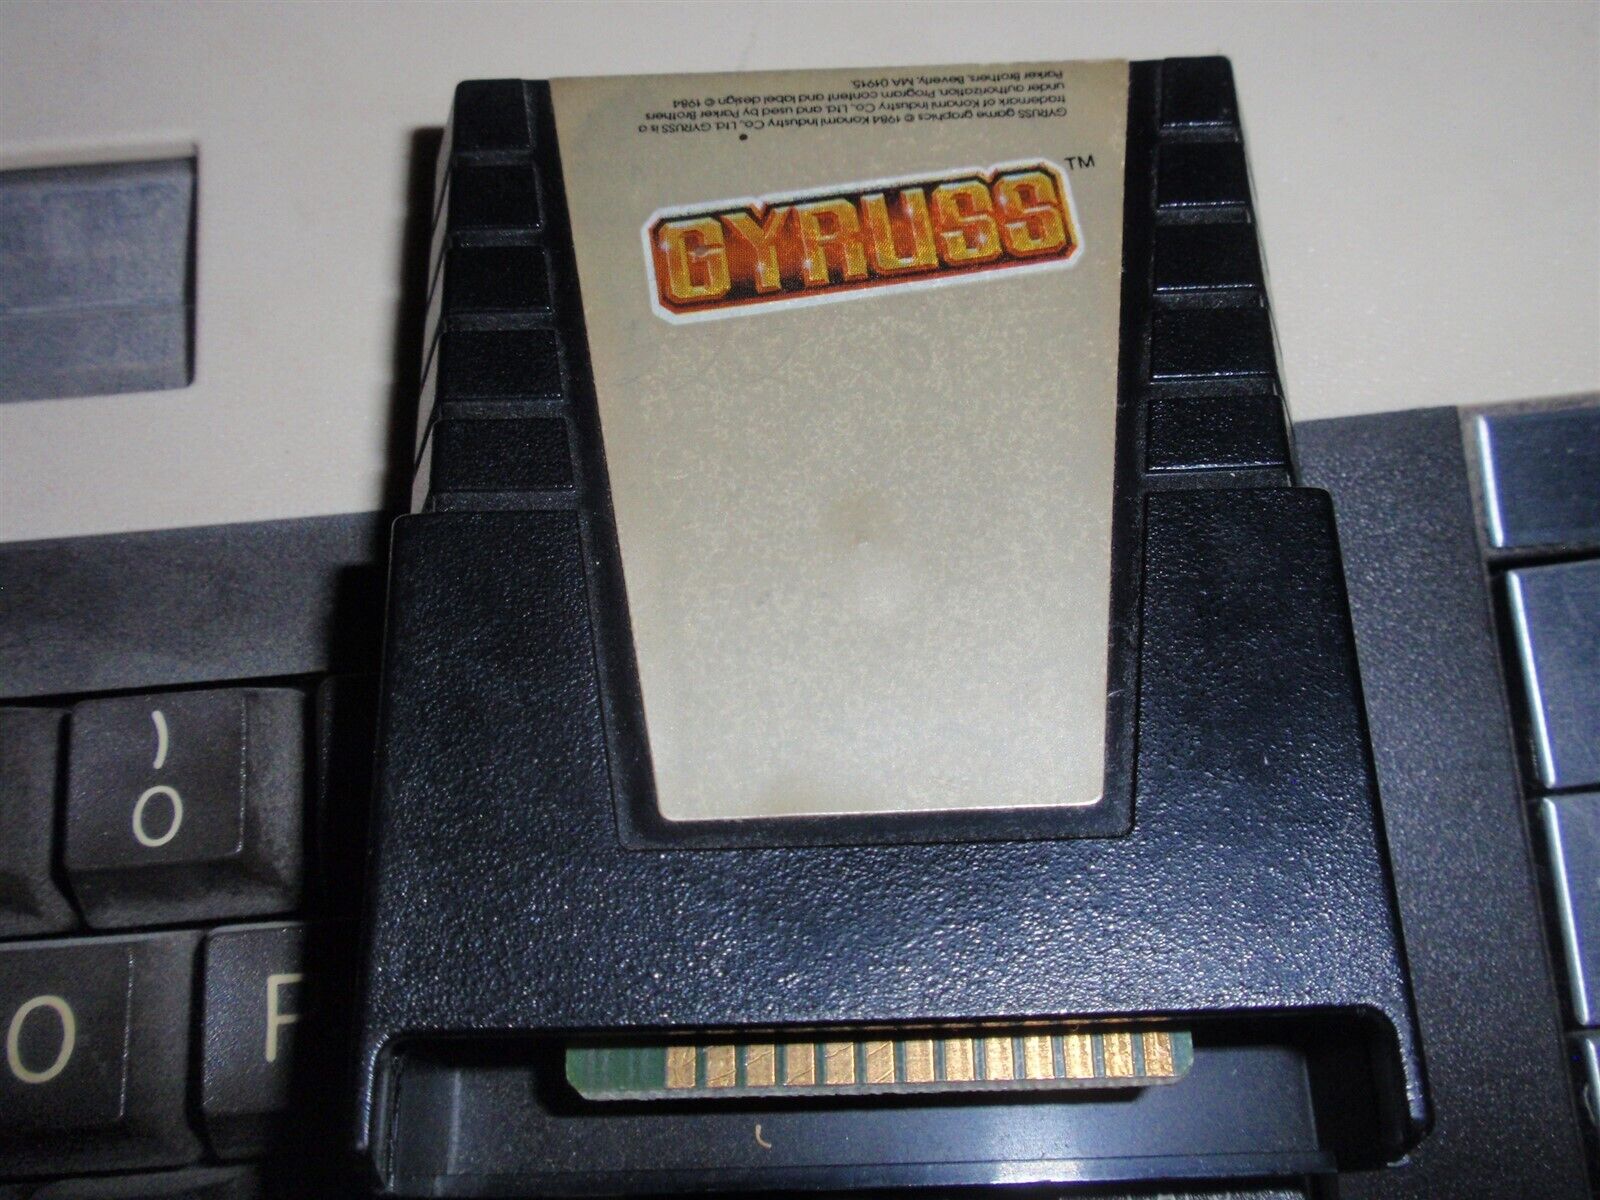 Gyruss Game Cartridge for Atari 8-bit Computers 400/800/800XL 1984 Parker Bros.